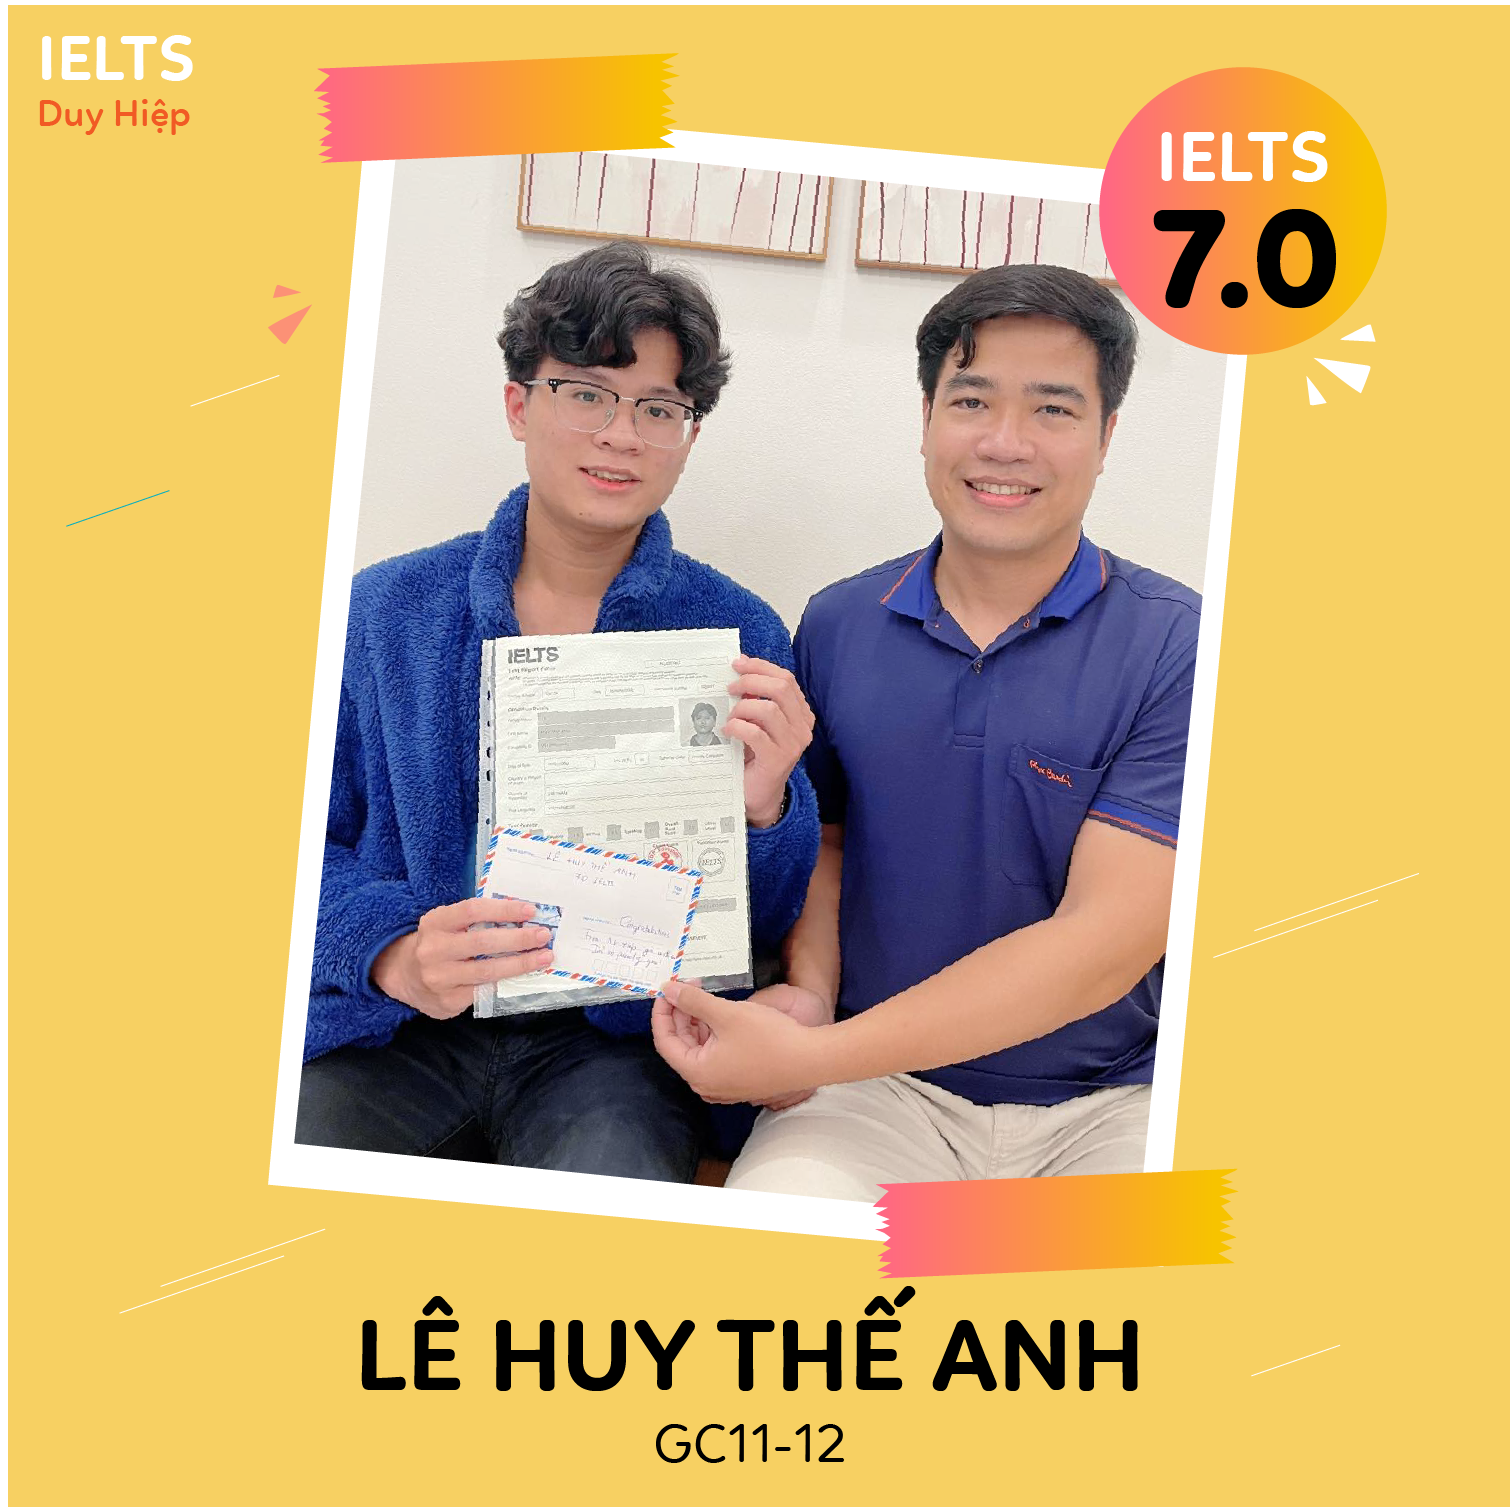 WALL OF FAME - Lê Huy Thế Anh 7.0 IELTS